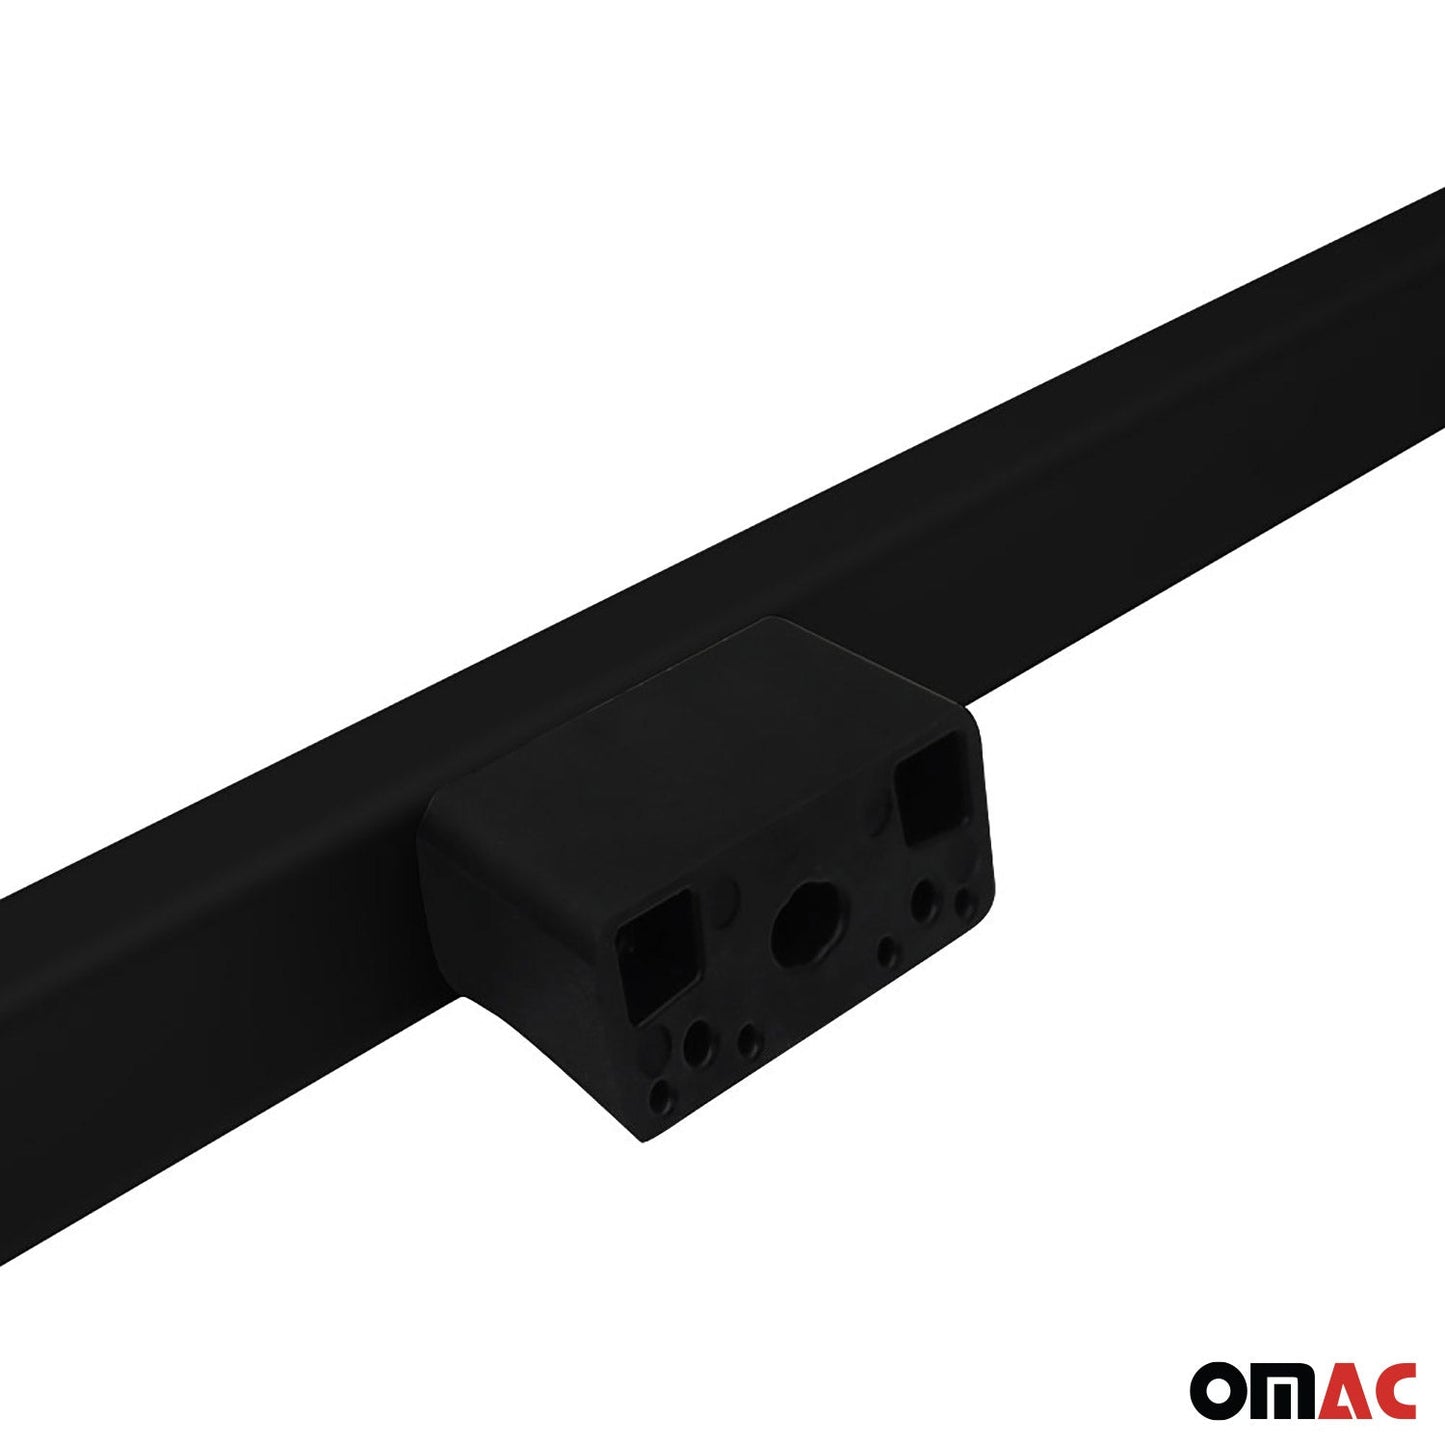 OMAC Custom Roof Rack Rails Cross Bars Set for Ford Escape 2013-2019 Black 4 Pcs G003354